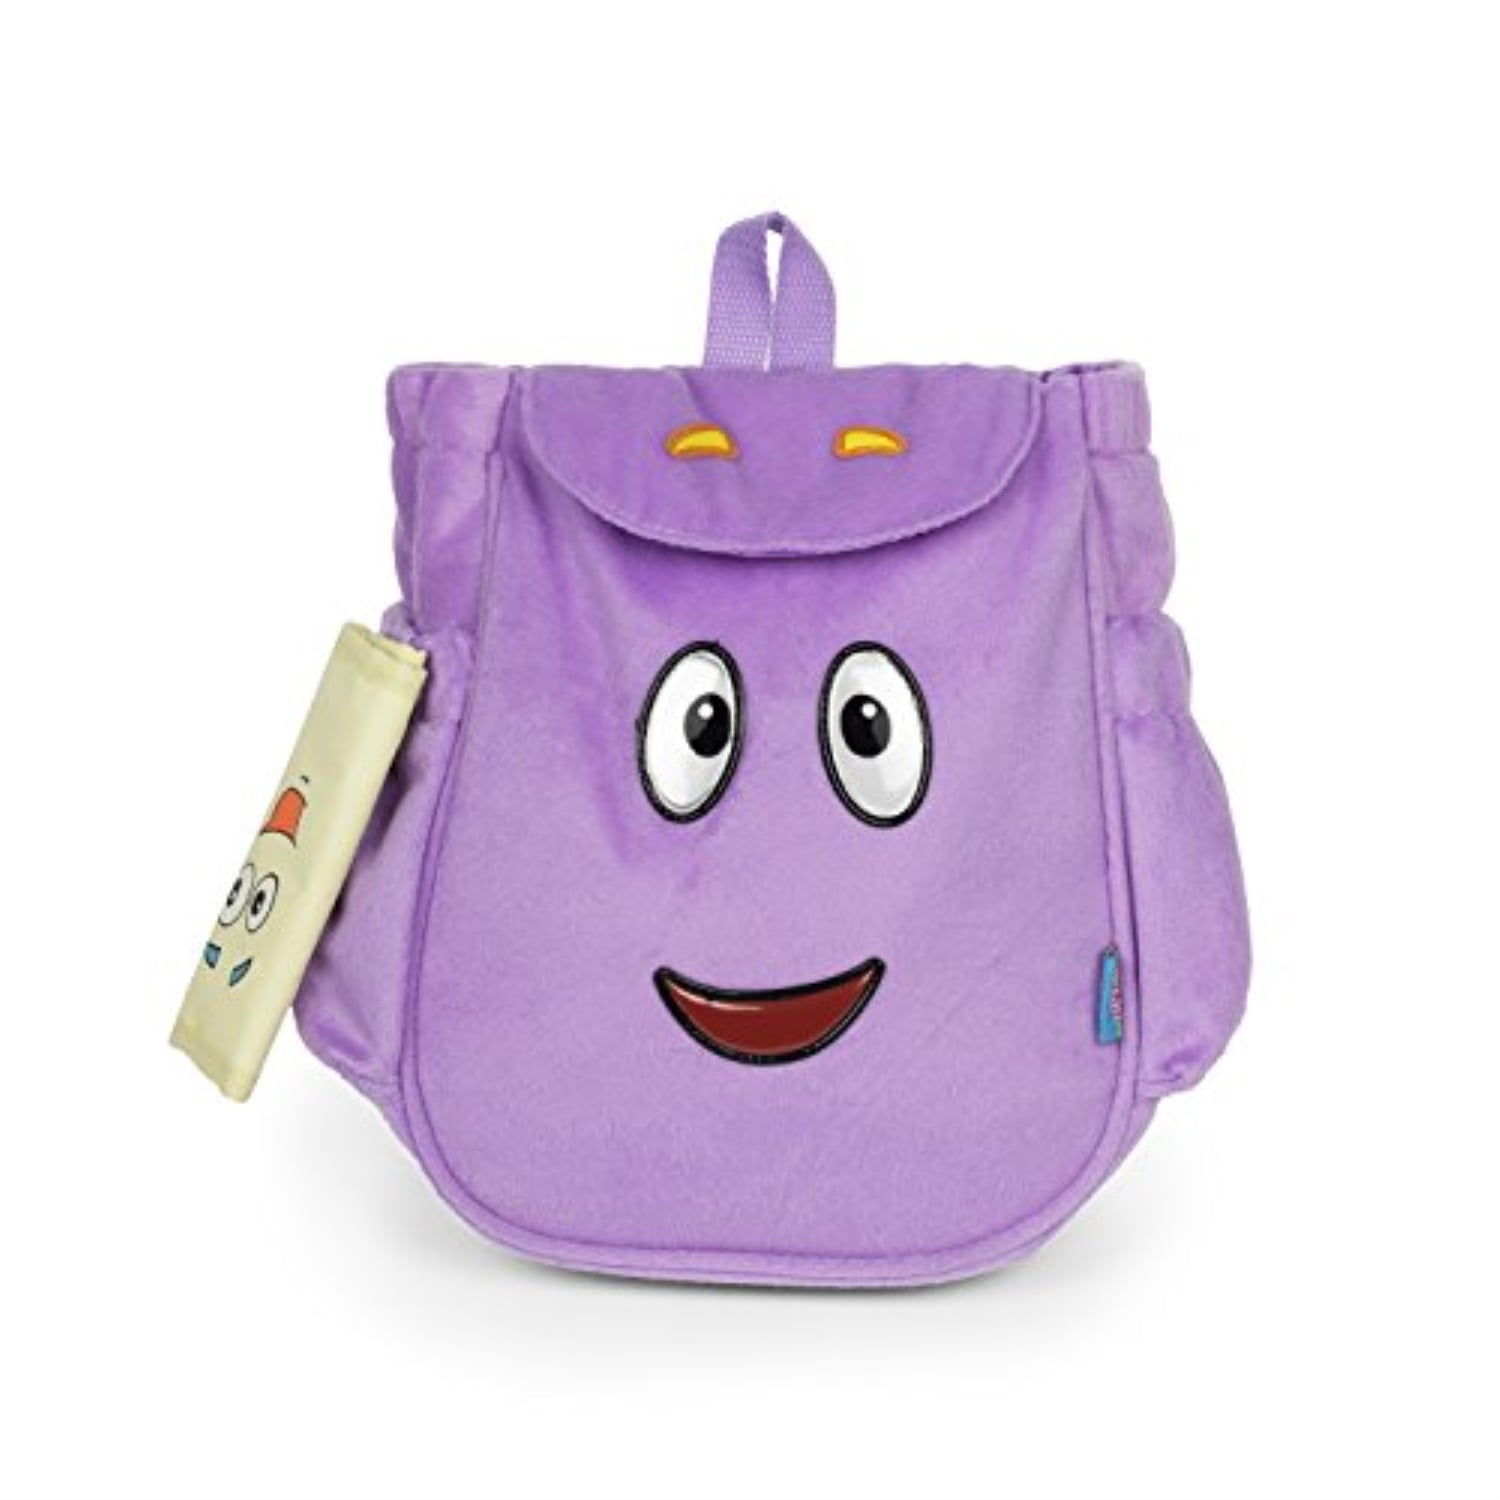 dora the explorer dora mr backpack purple plush backpack with map new style 47ac1431 e5b5 407e 86b9 50ea43fcb60c 1.5e16448102553dc9274a24aff2912ec2